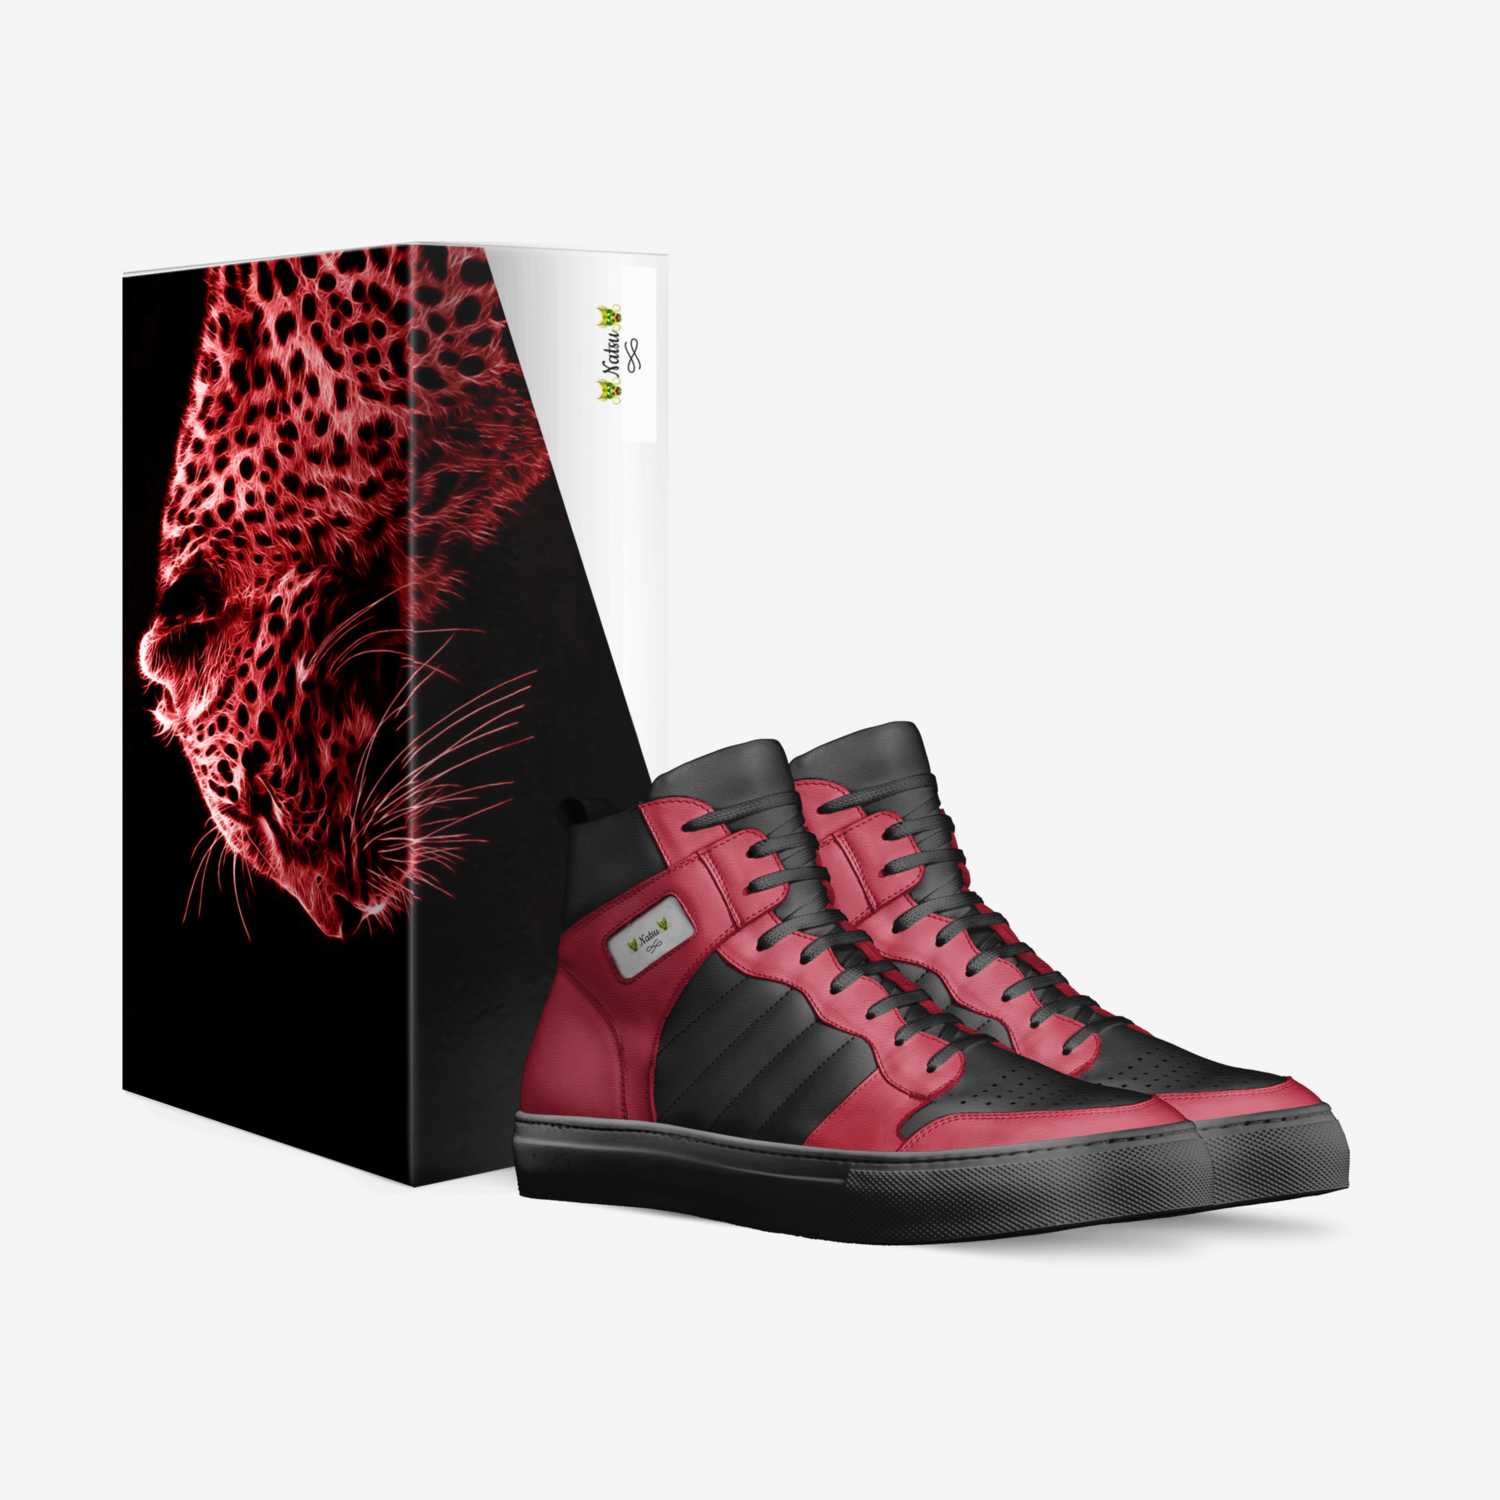 🐲Natsu🐲 custom made in Italy shoes by Natsu Omar | Box view